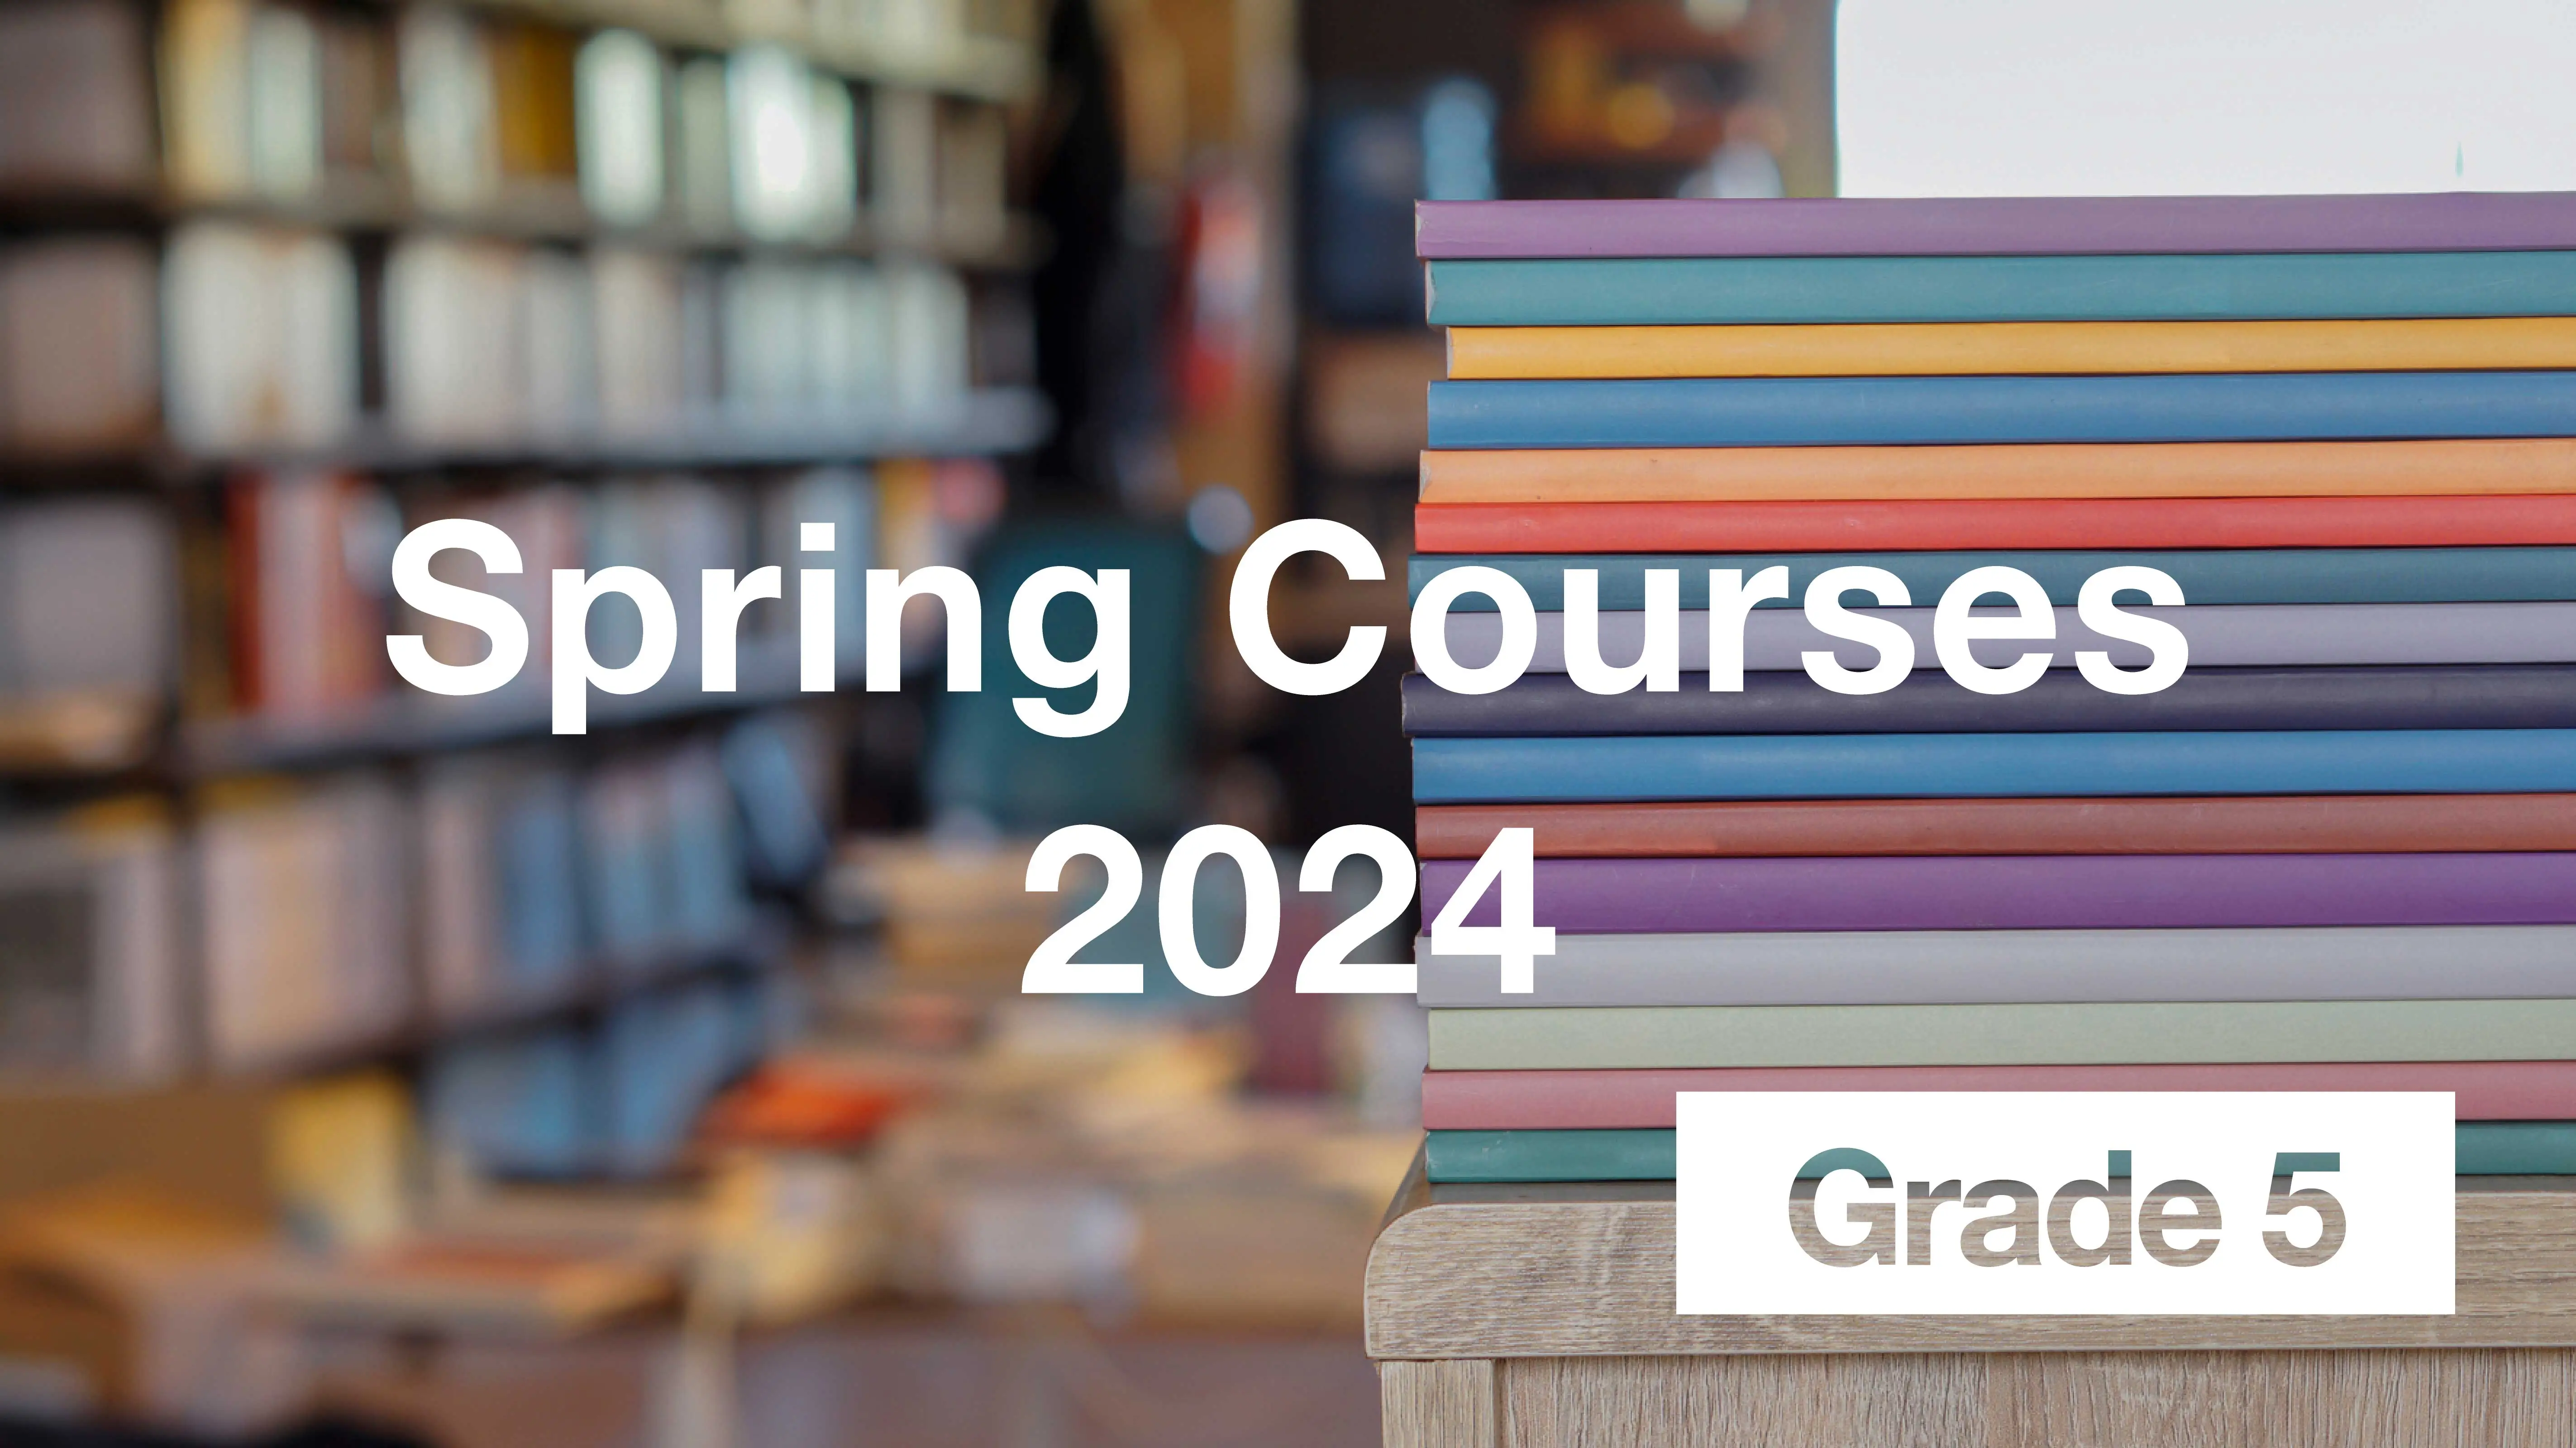 Spring Courses 2024 - New Grade 5 -